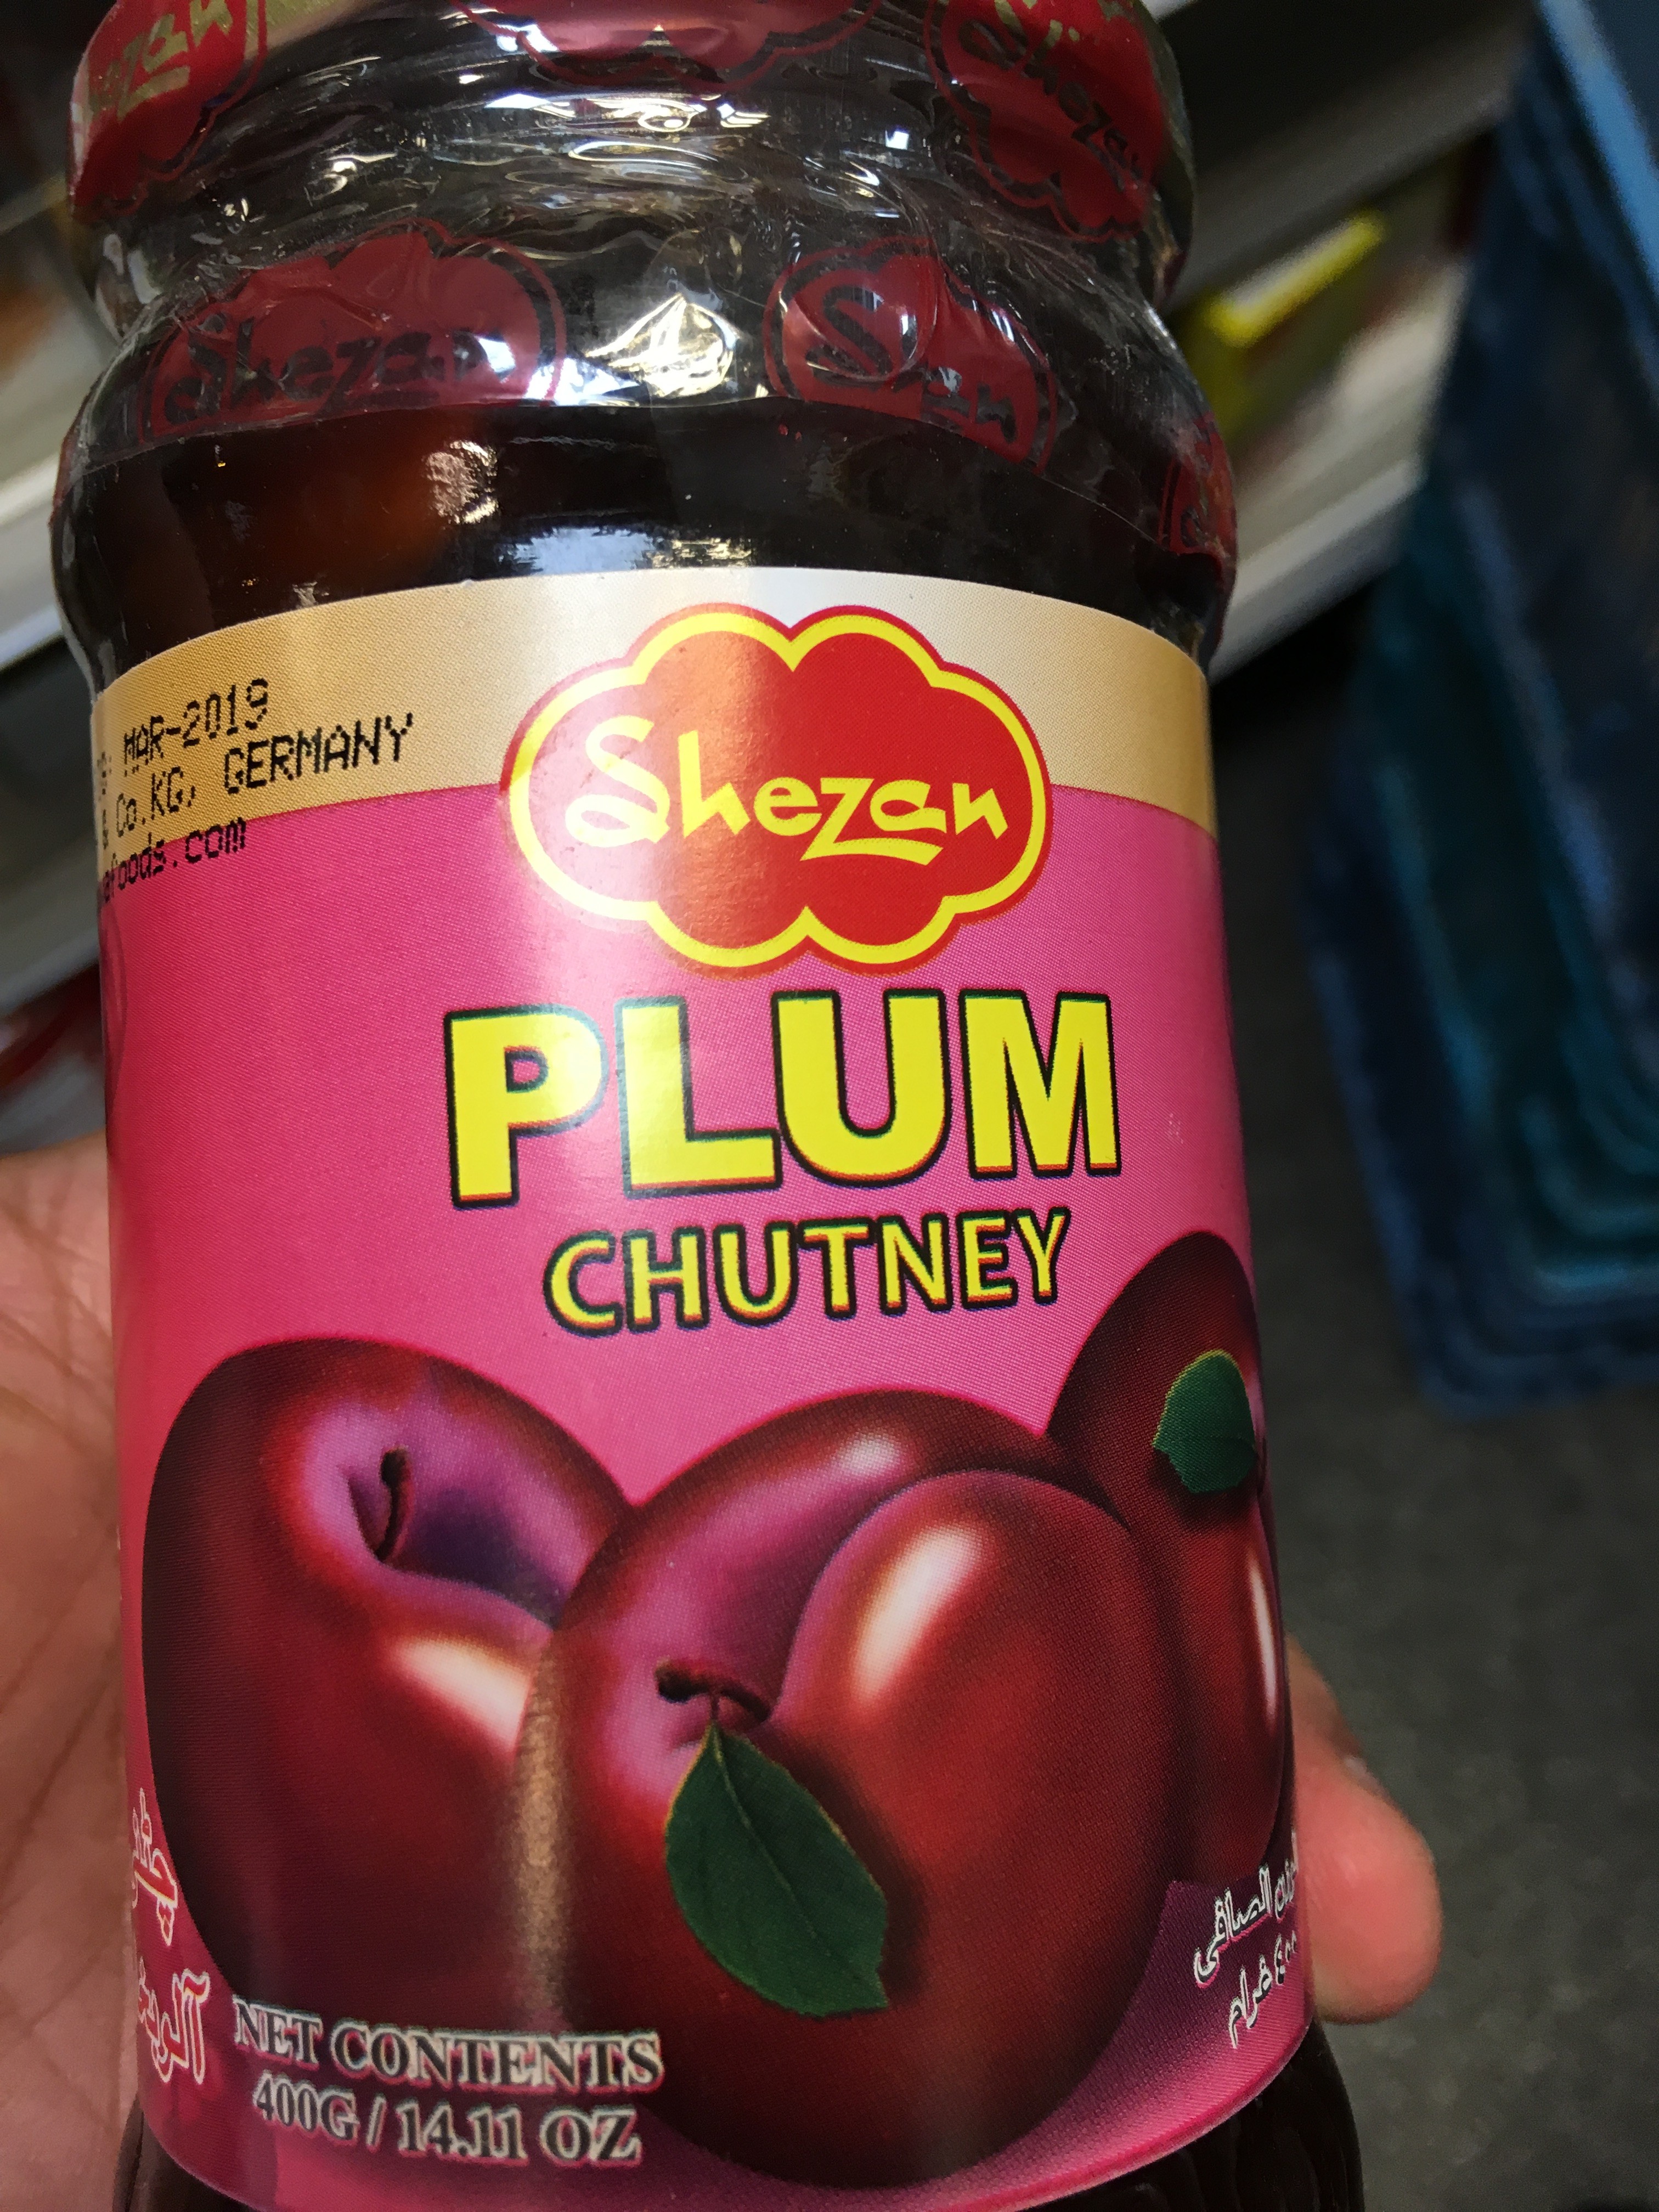 Shezan Plum Chutney